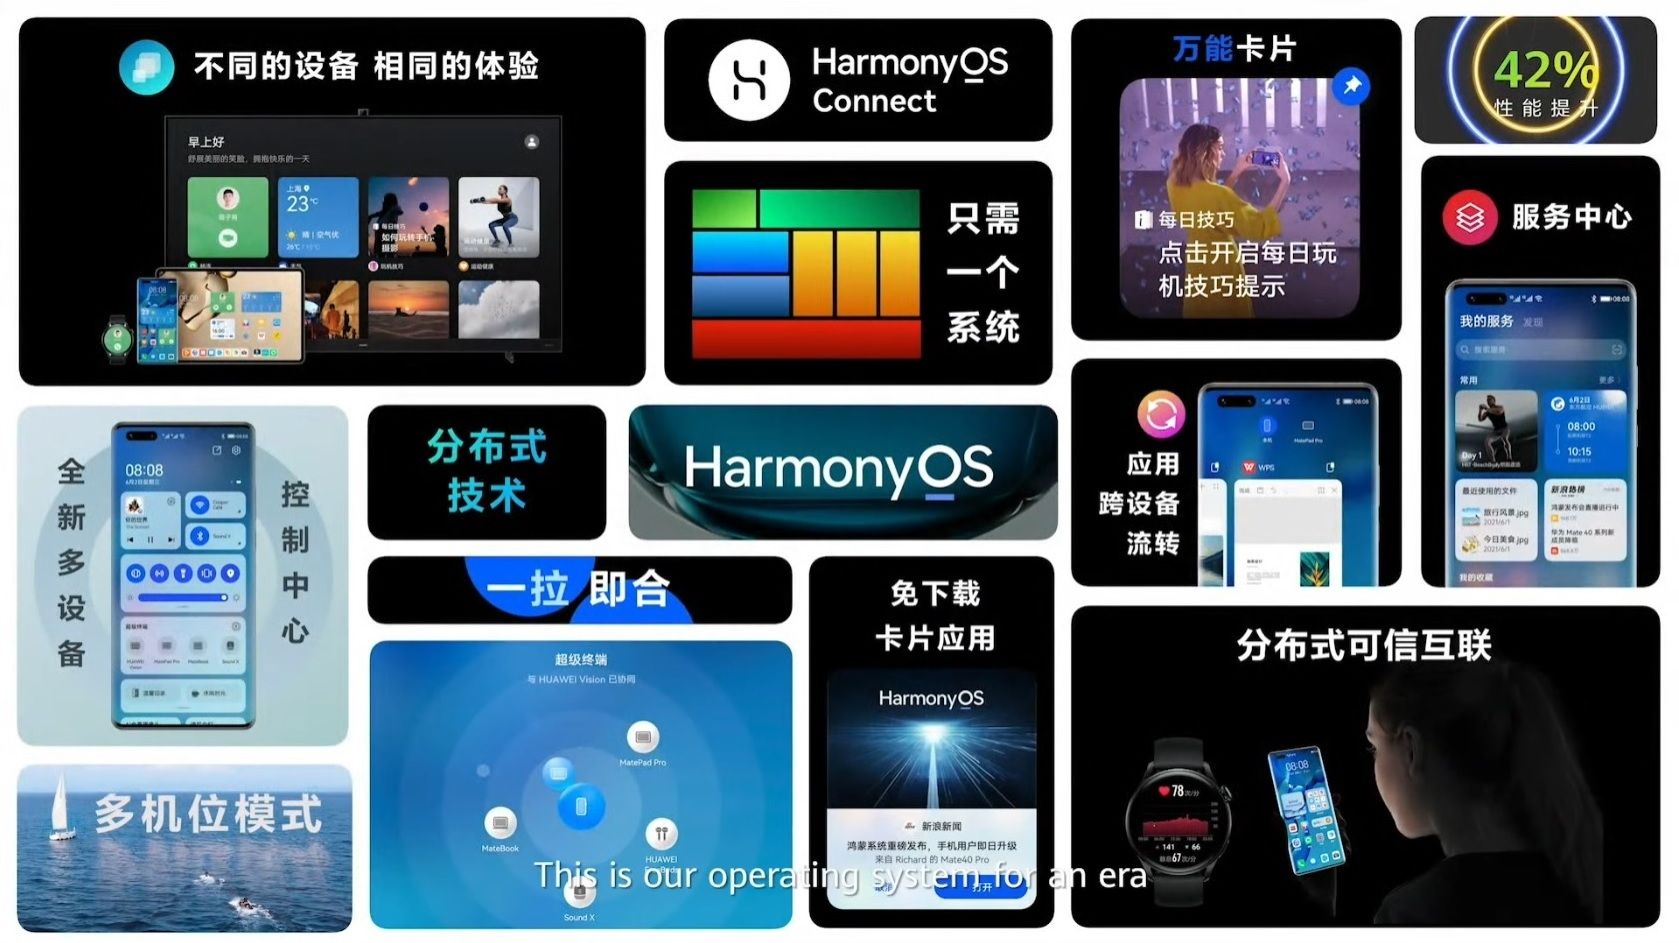 HarmonyOS : les applications Android sont bien compatibles